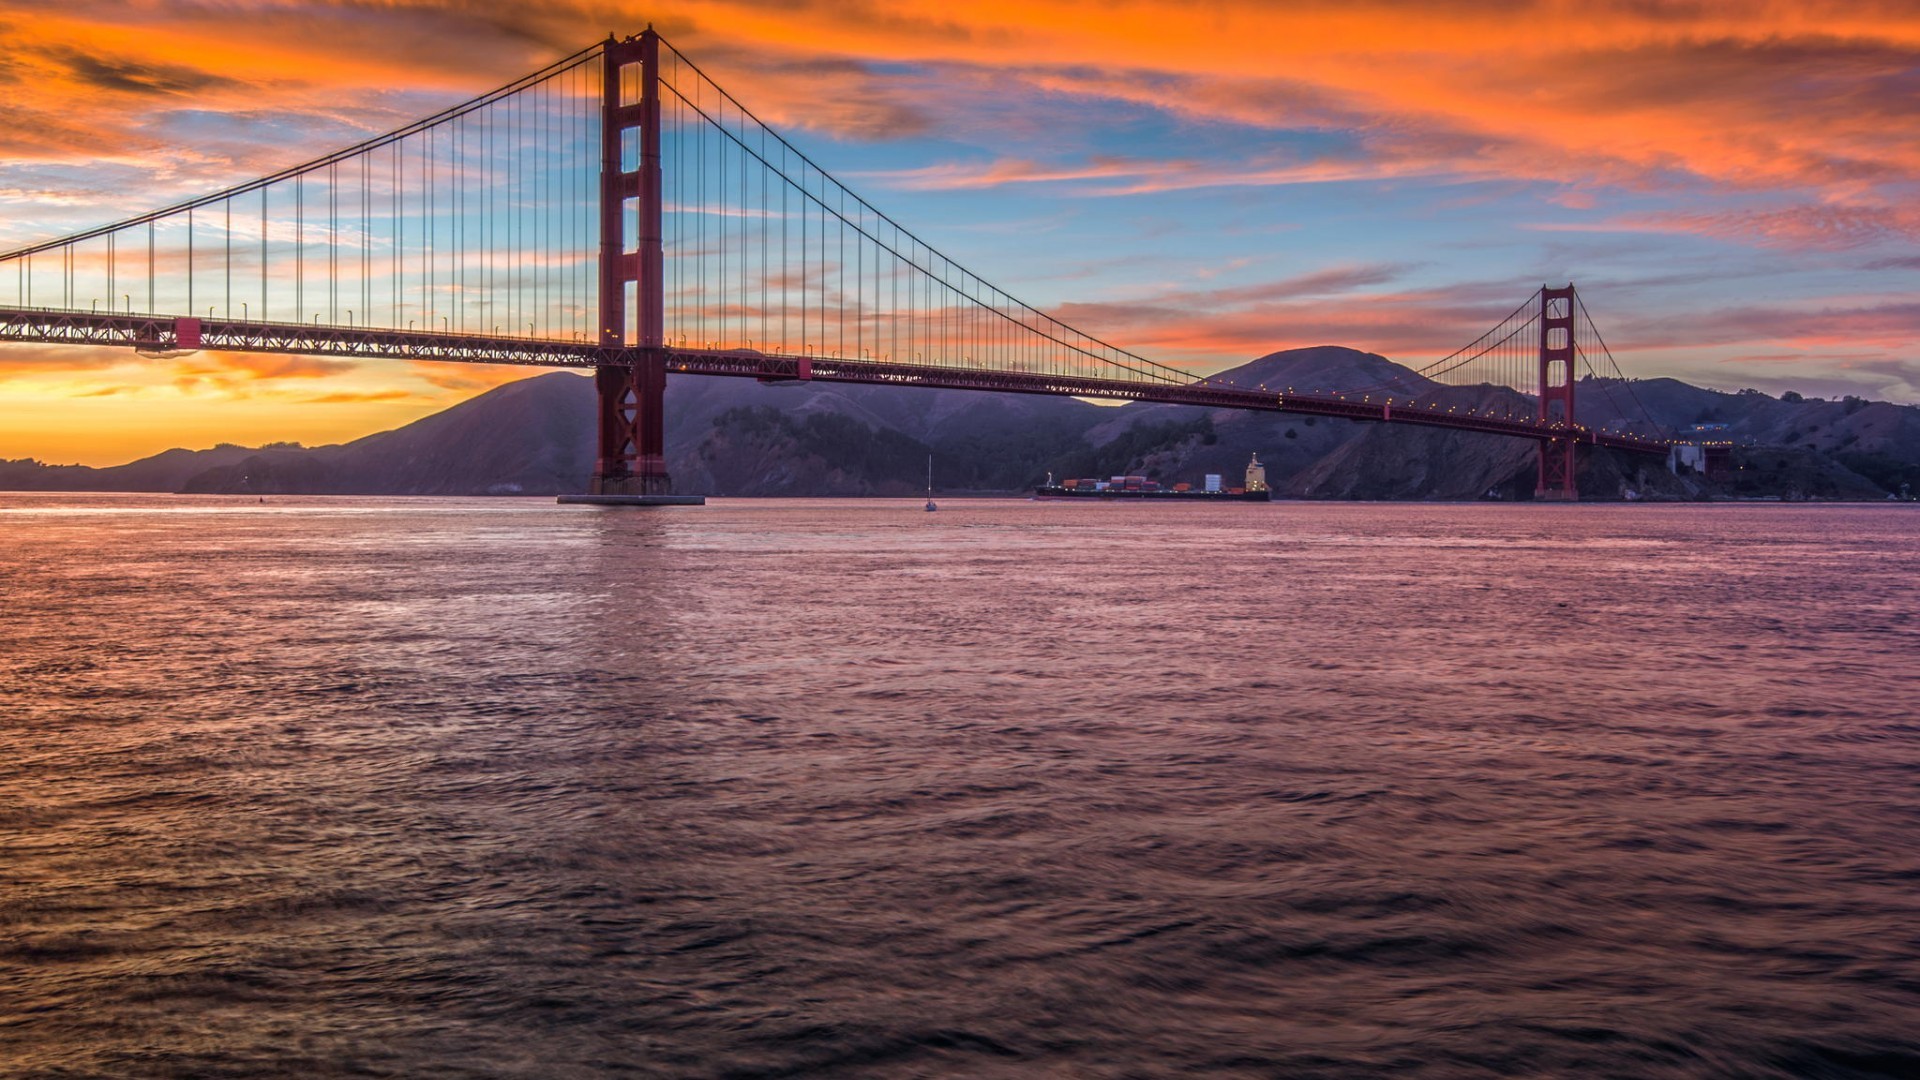 General 1920x1080 HDR Golden Gate Bridge USA sky bridge suspension bridge